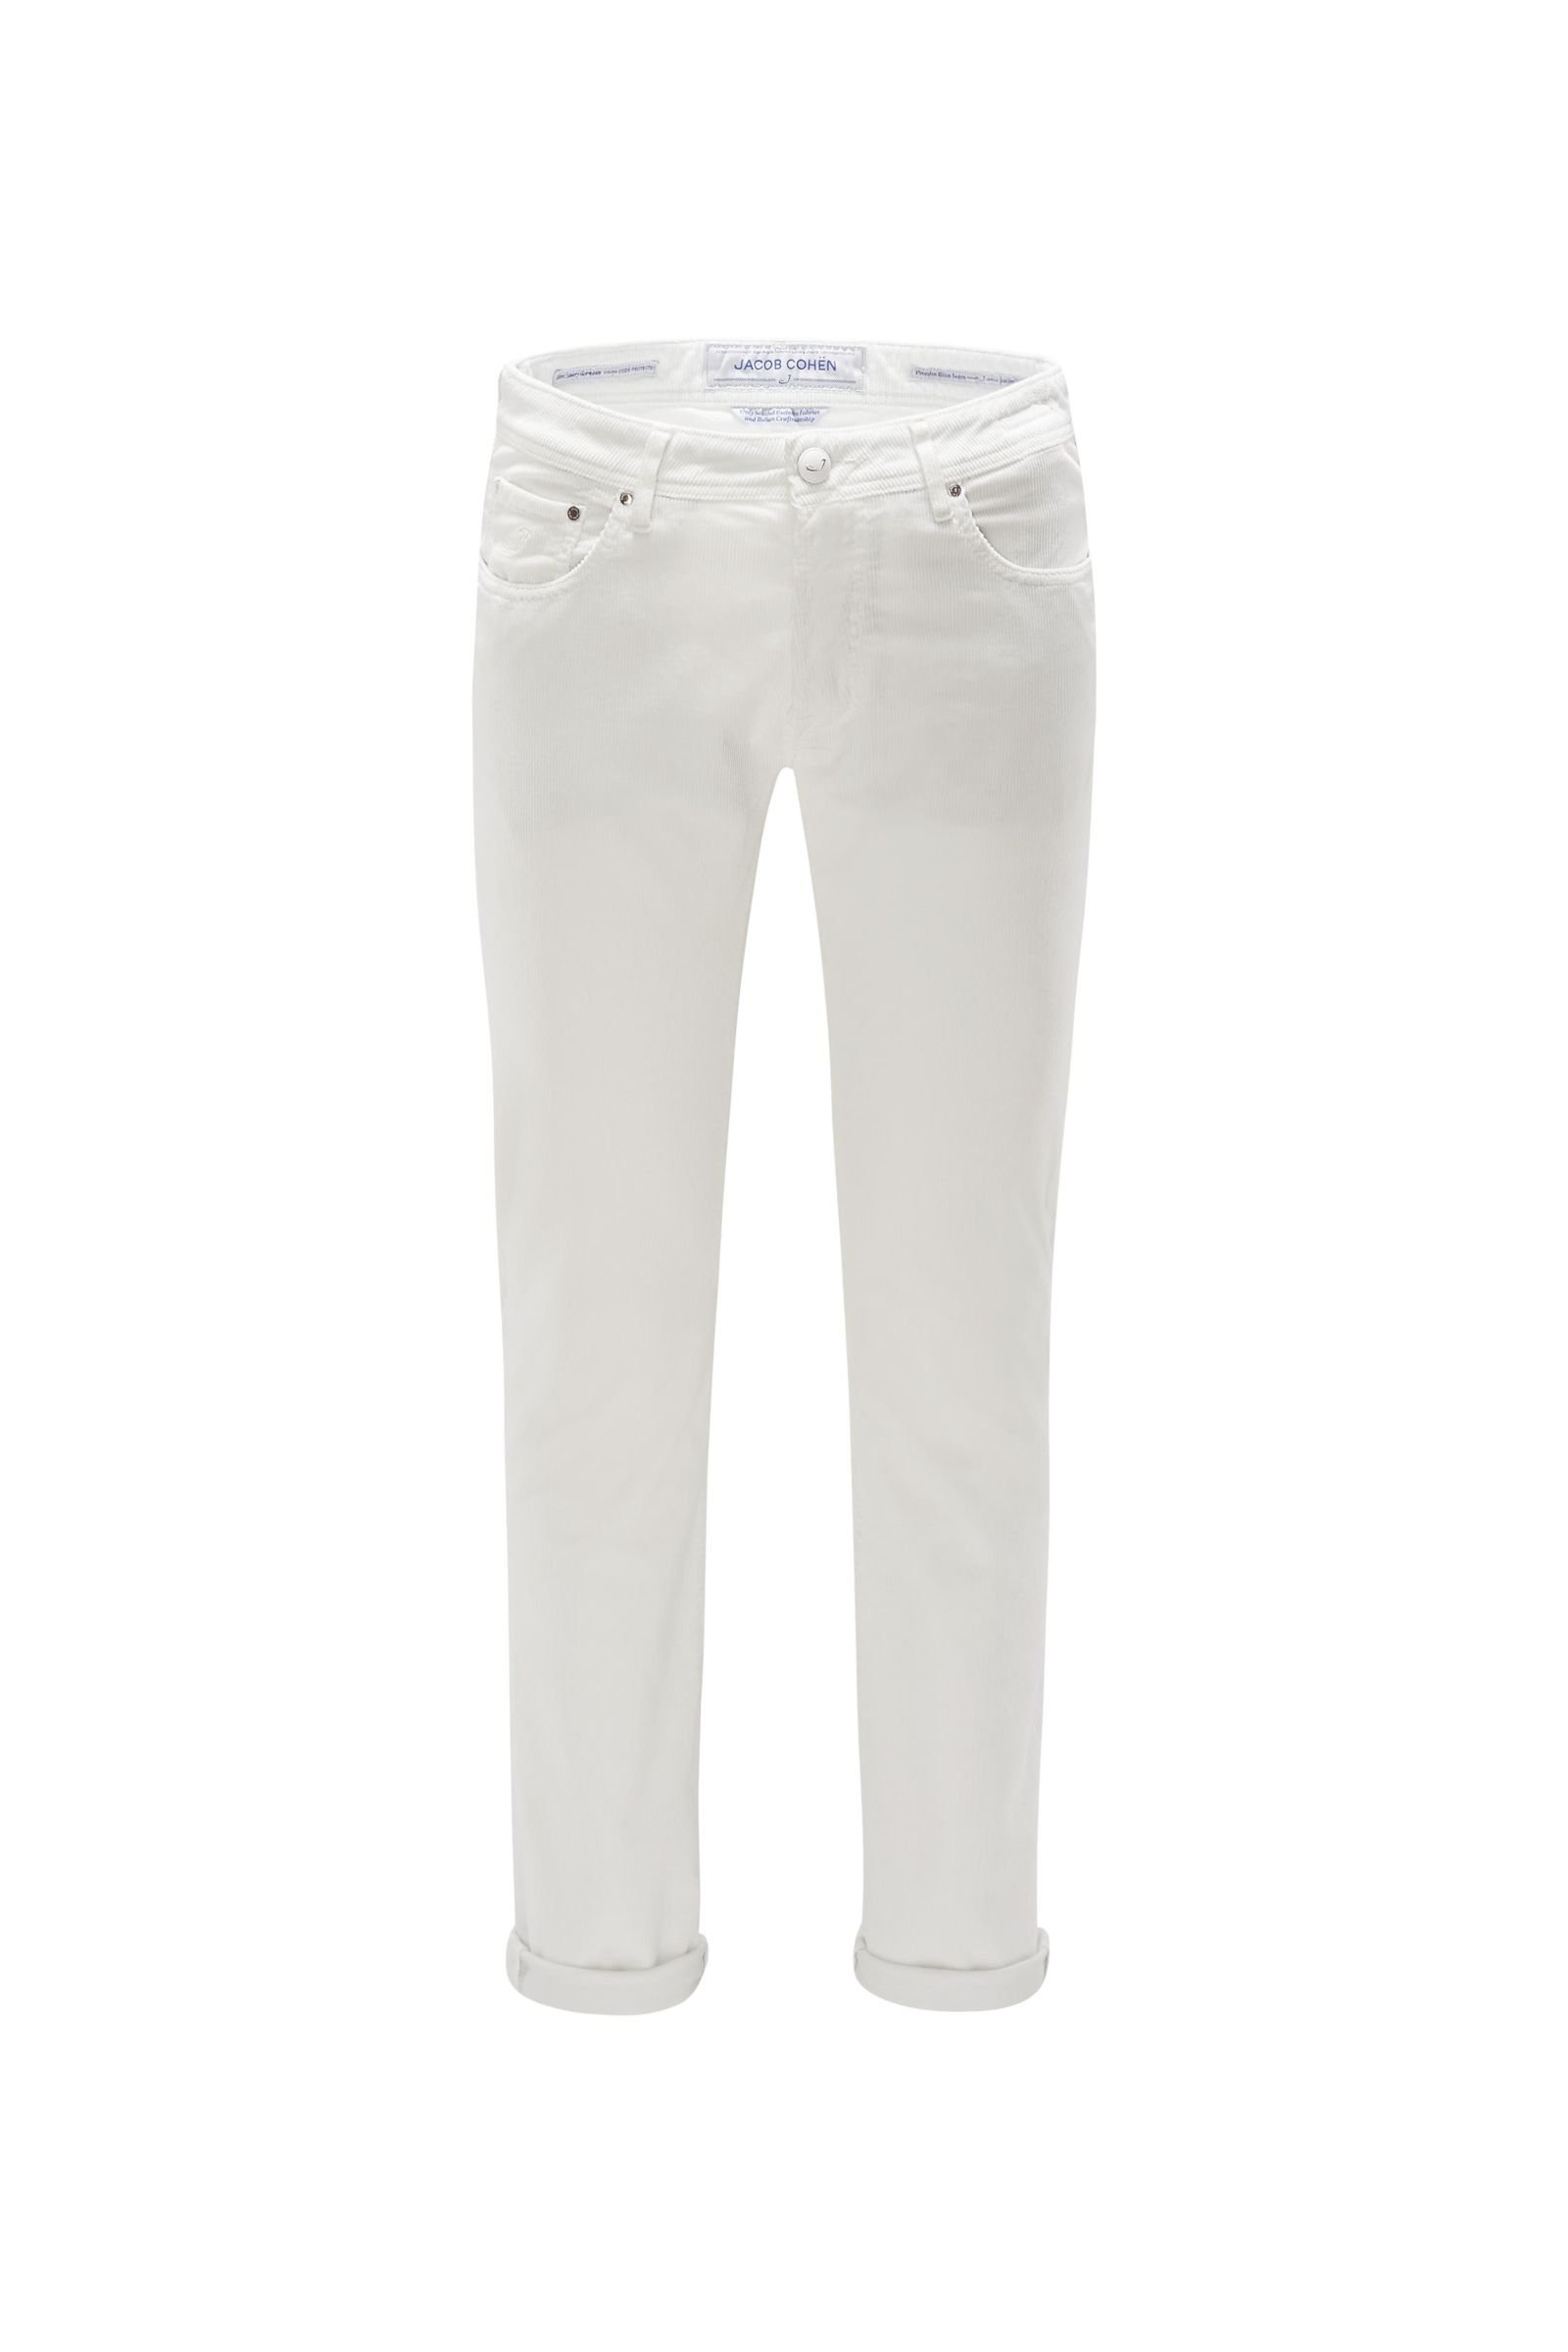 Corduroy trousers ‘J688 Comfort Slim Fit’ white